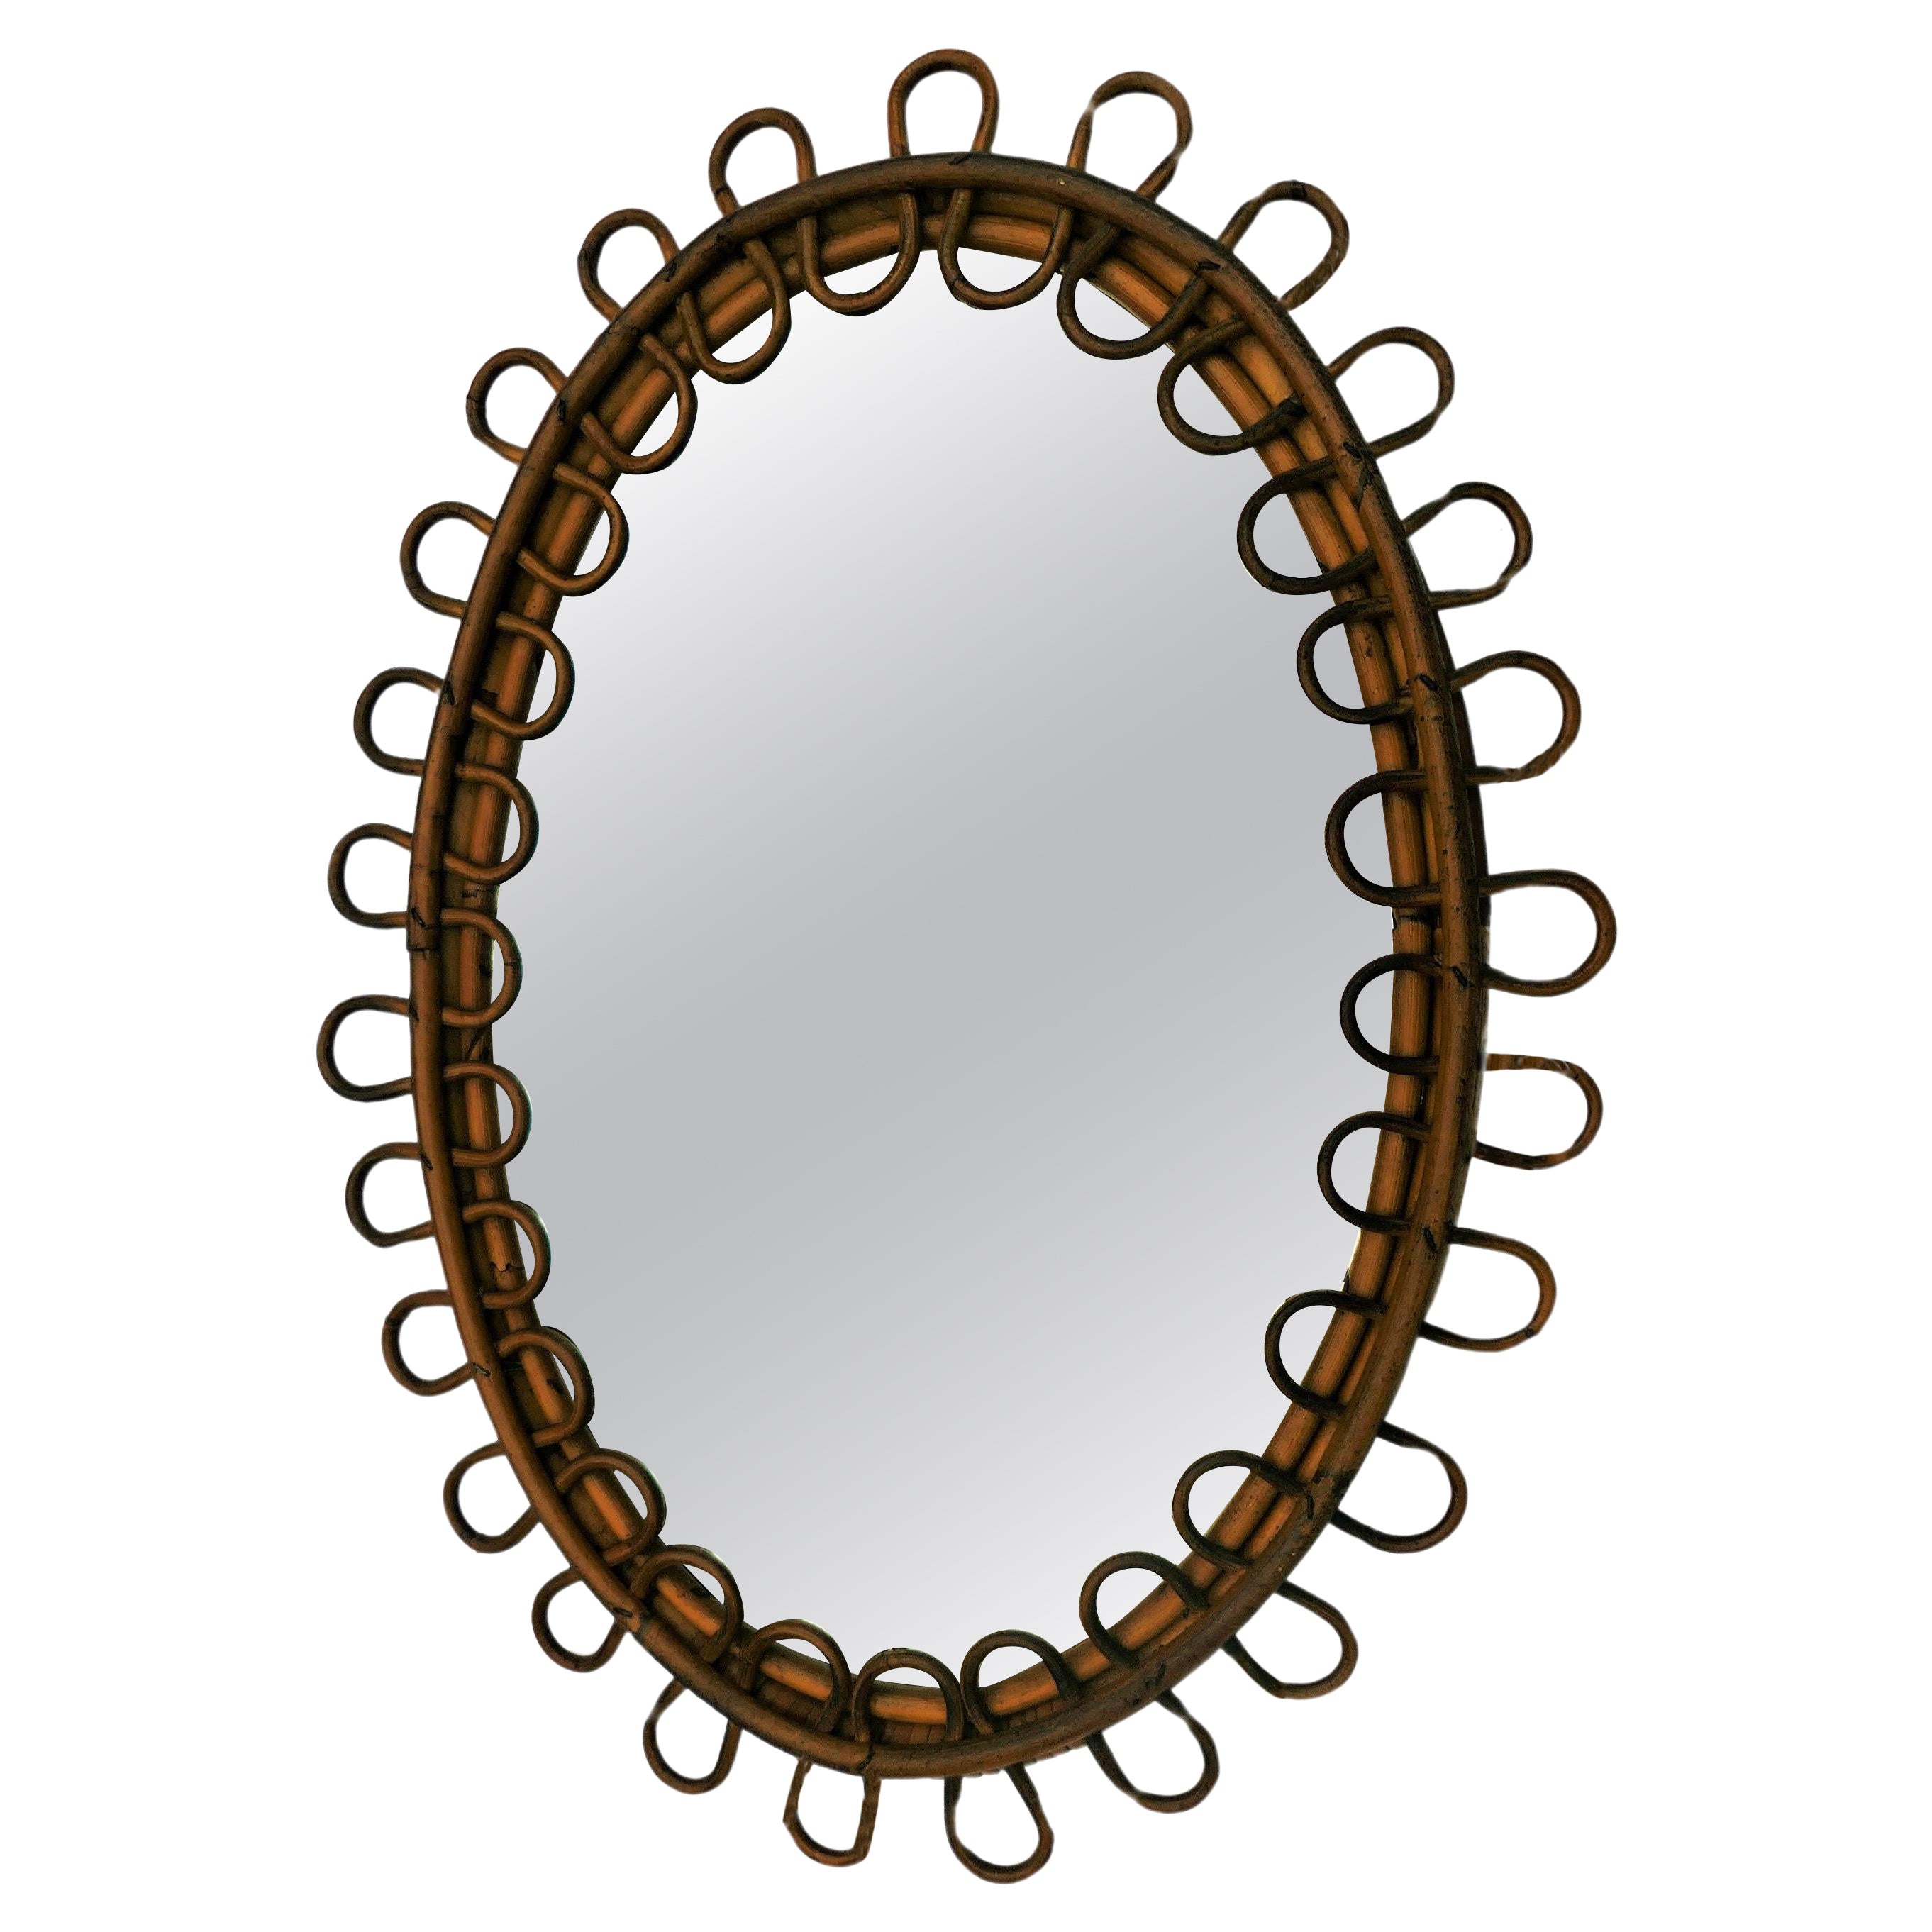 French or Italian rattan wicker mirror